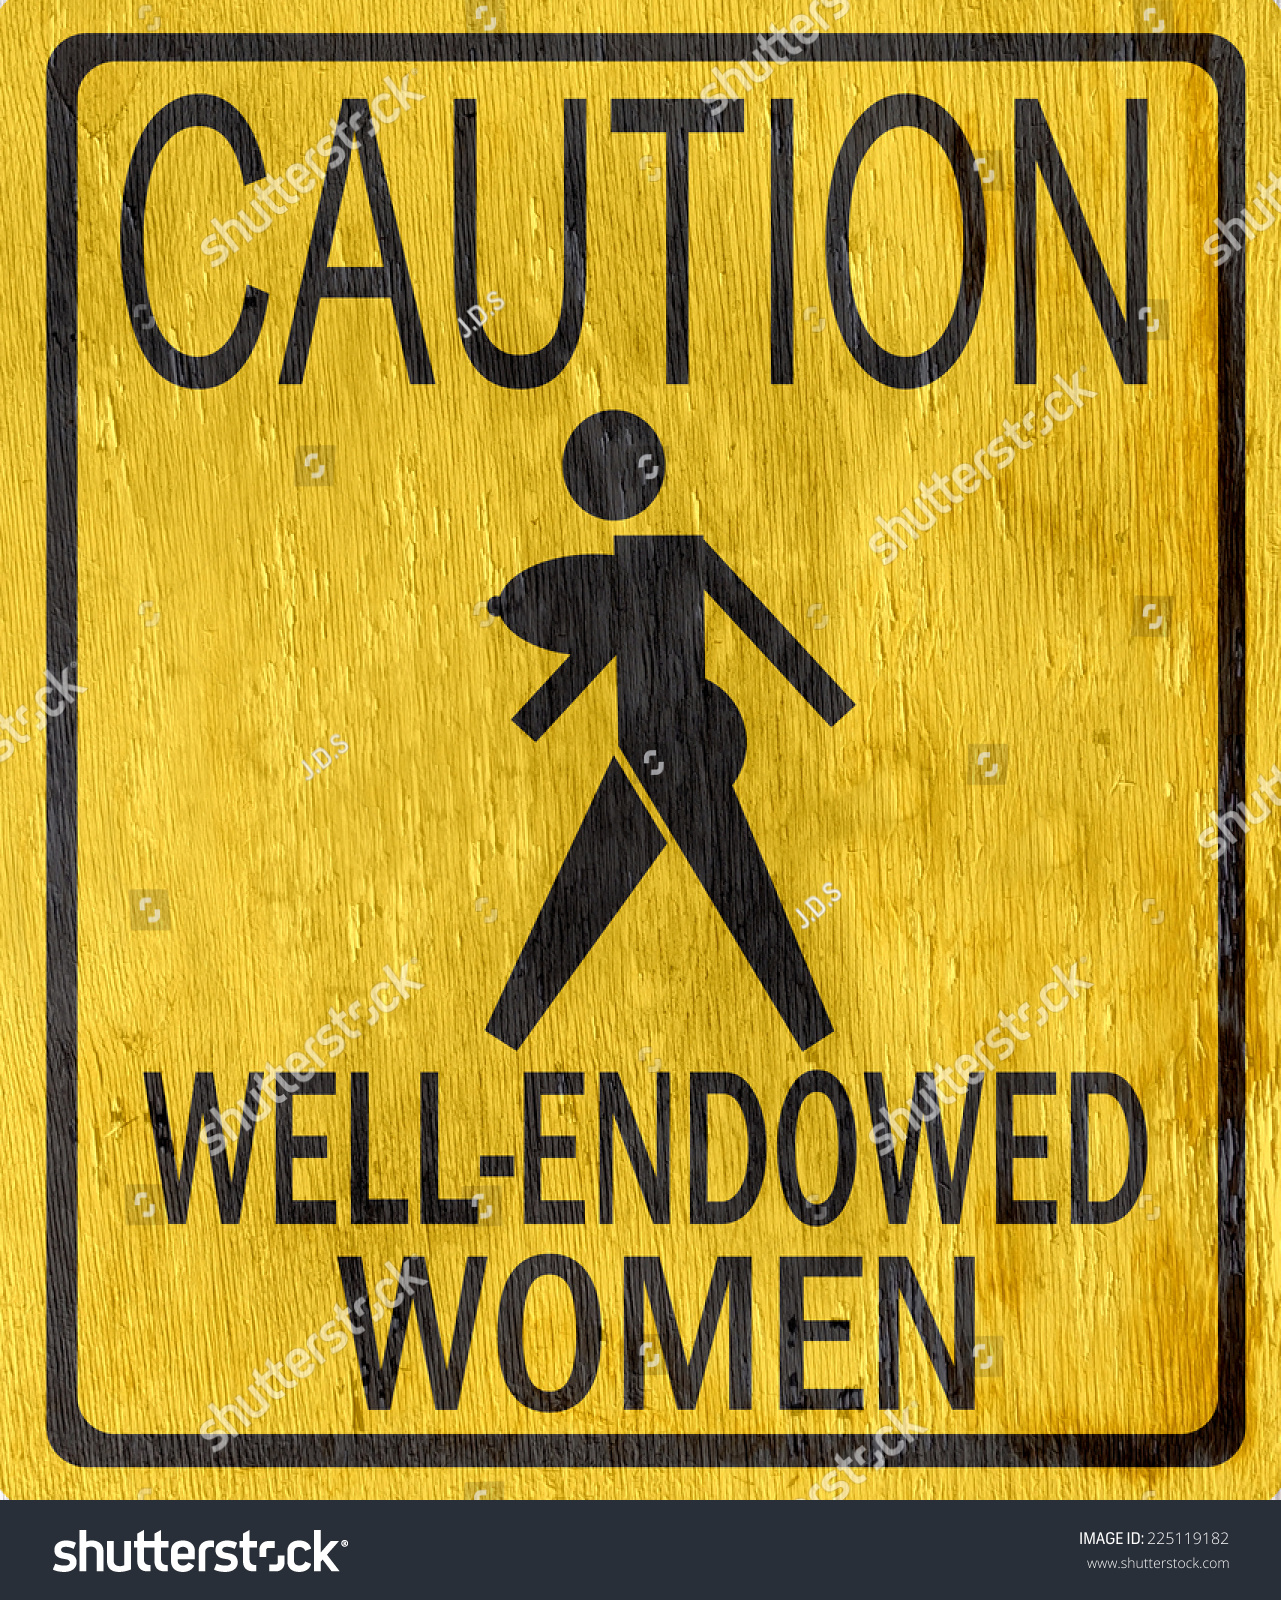 Endowed women well ‘Well